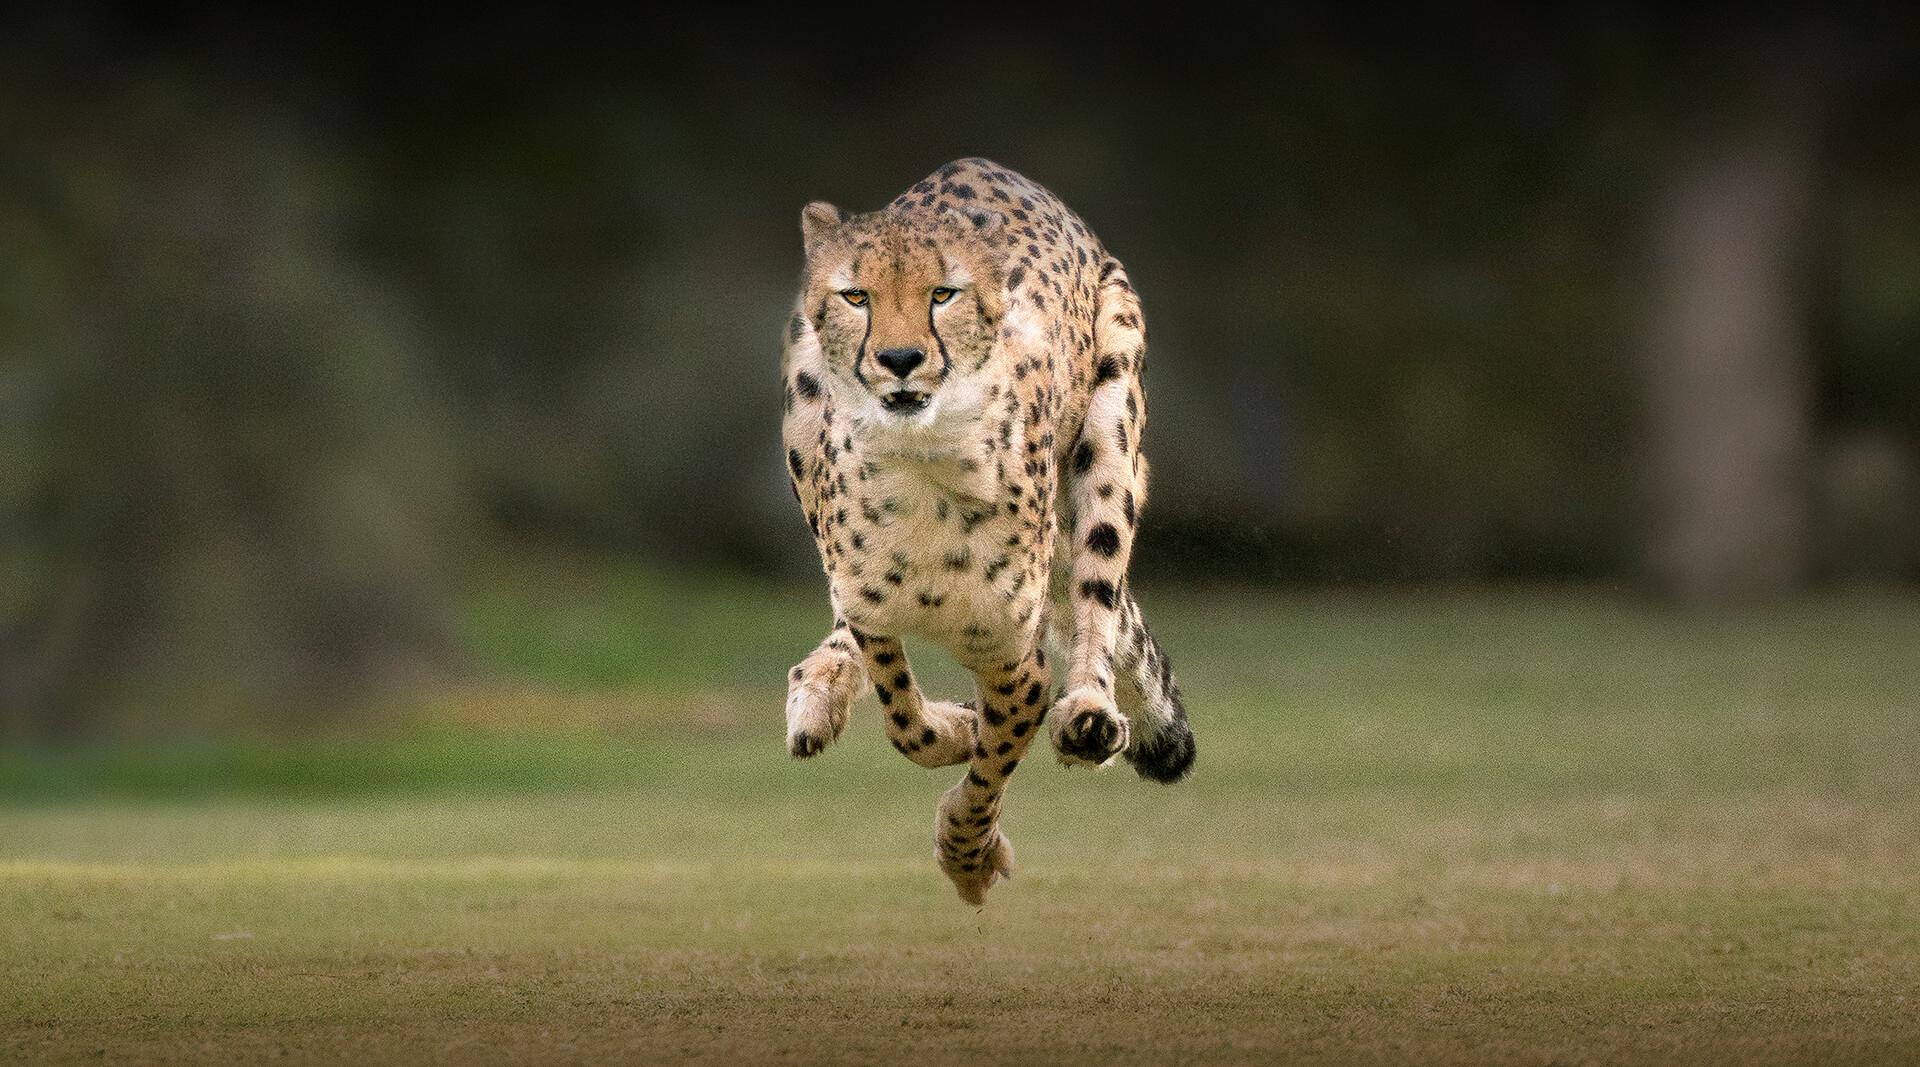 Cheetah running straight at camera on large grass lawn.